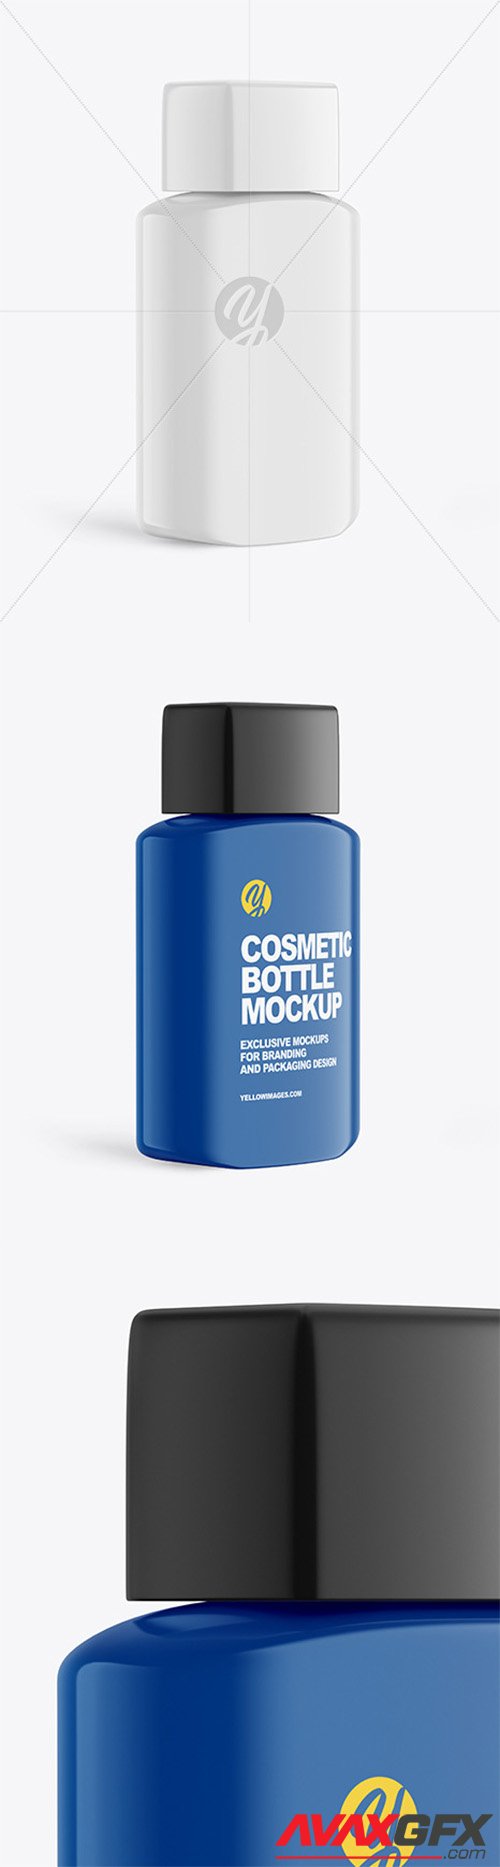 Glossy Cosmetic Bottle Mockup 84878 TIF